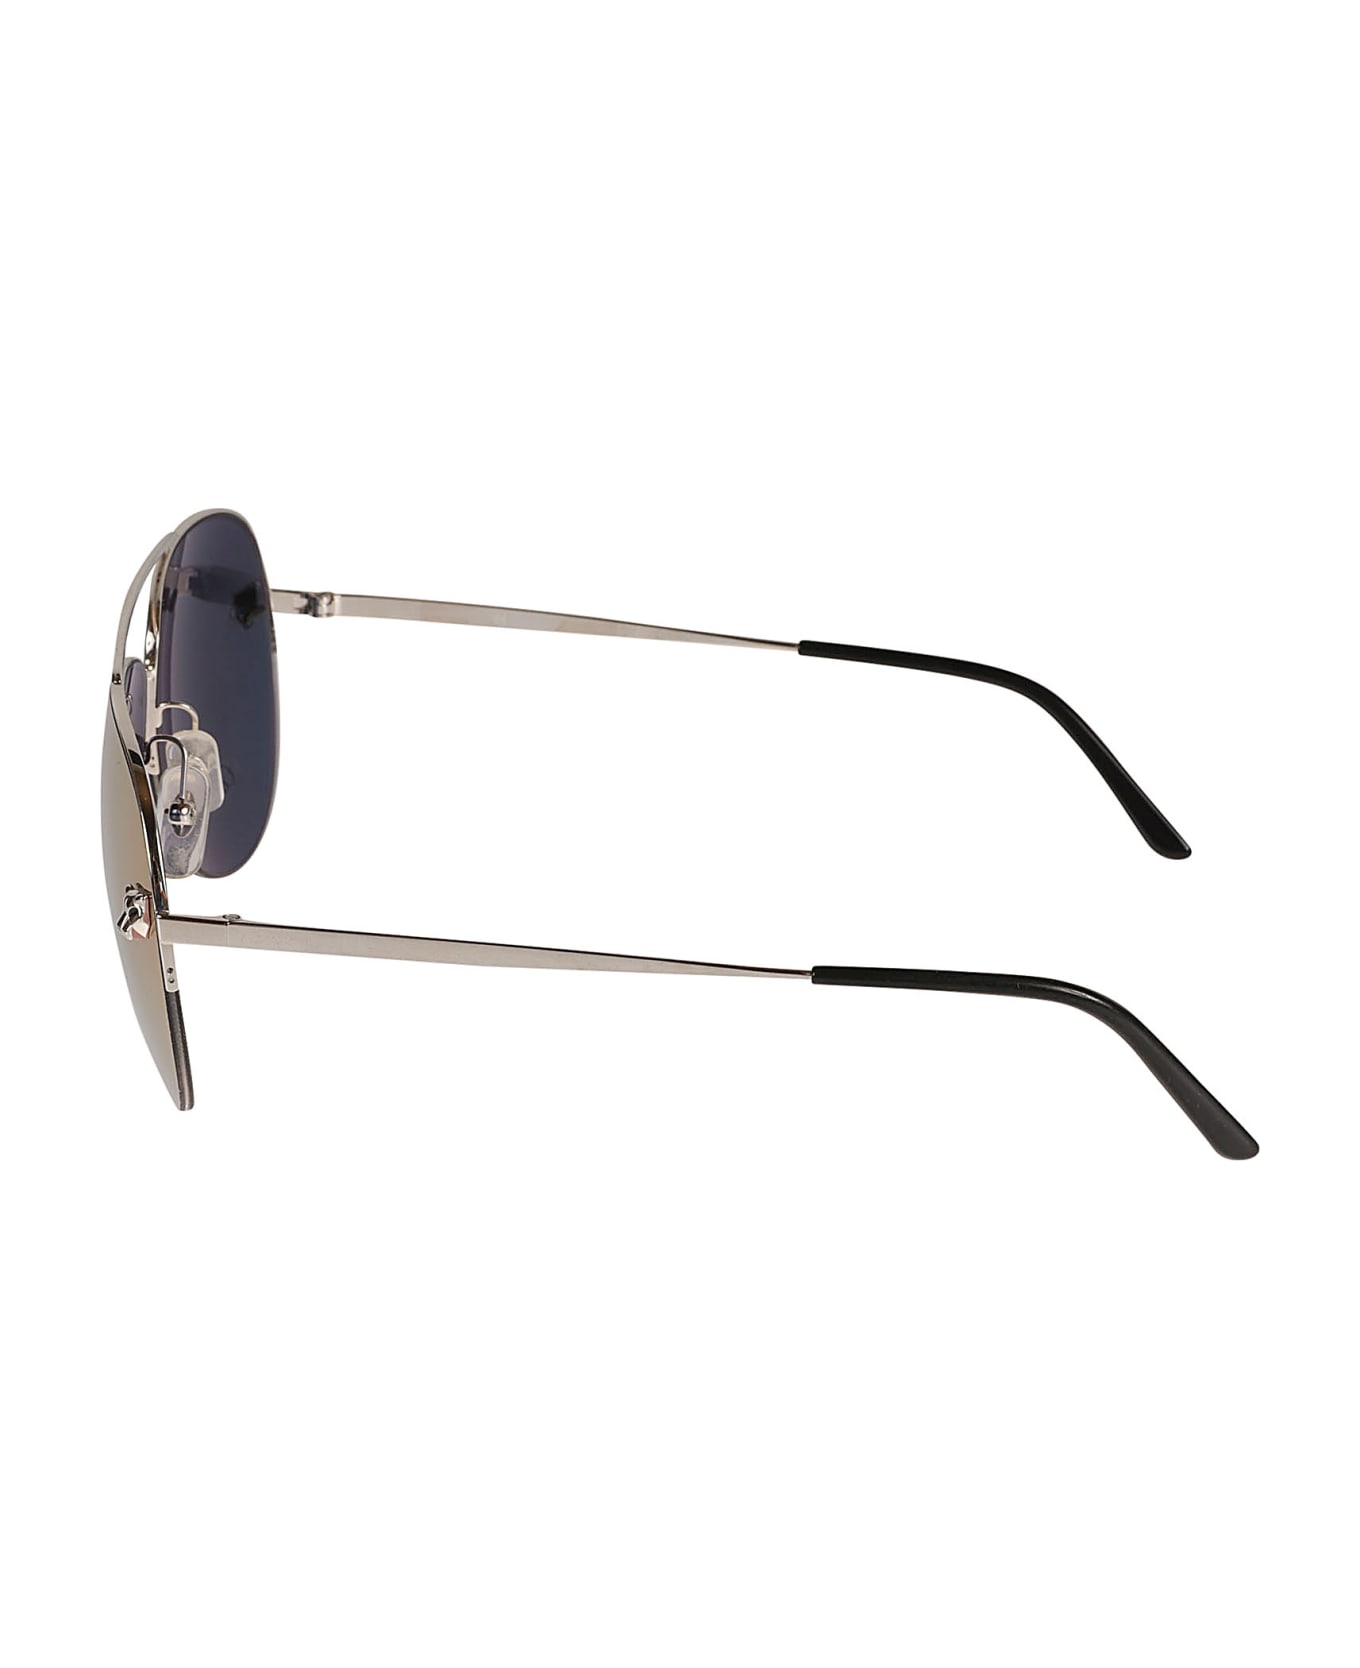 Cartier Eyewear Aviator Classic Sunglasses - PLATINUM